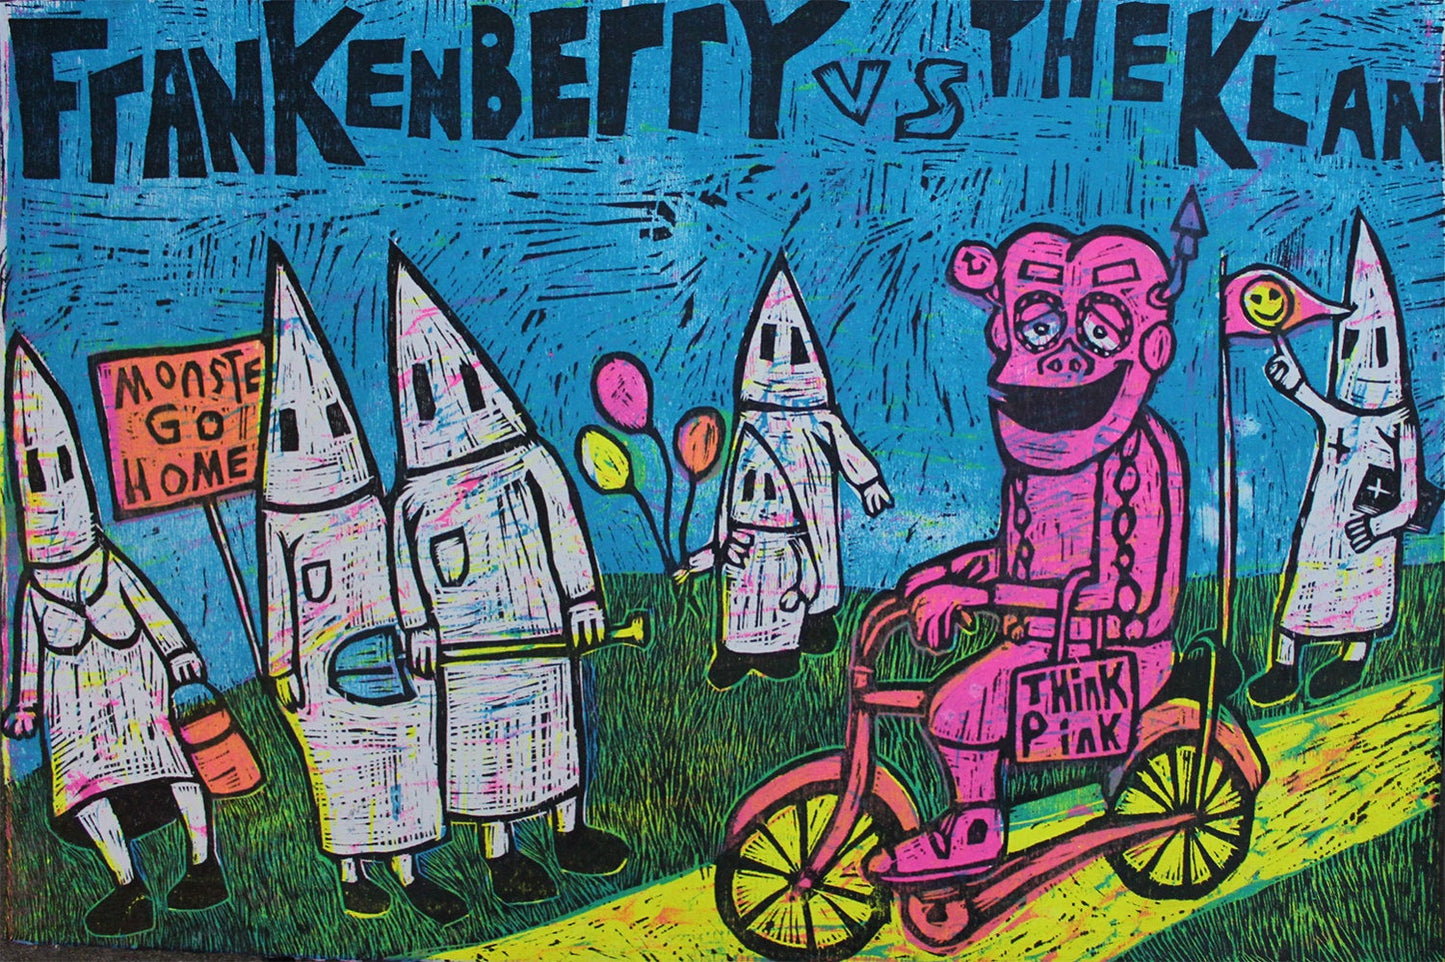 Frankenberry Vs the Klan classic woodcut